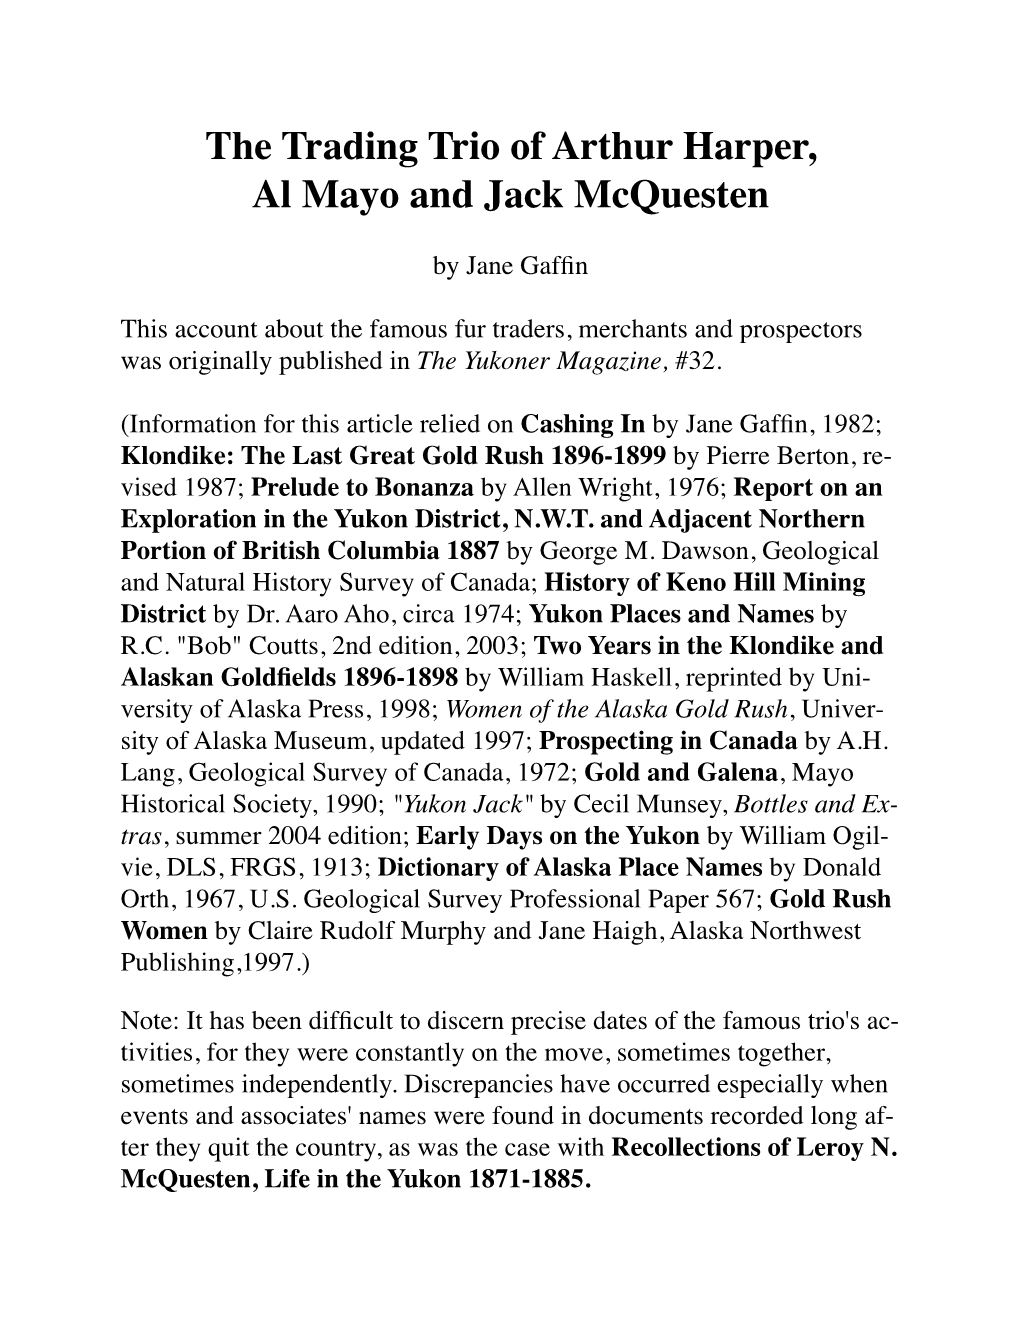 Al Mayo and Jack Mcquesten